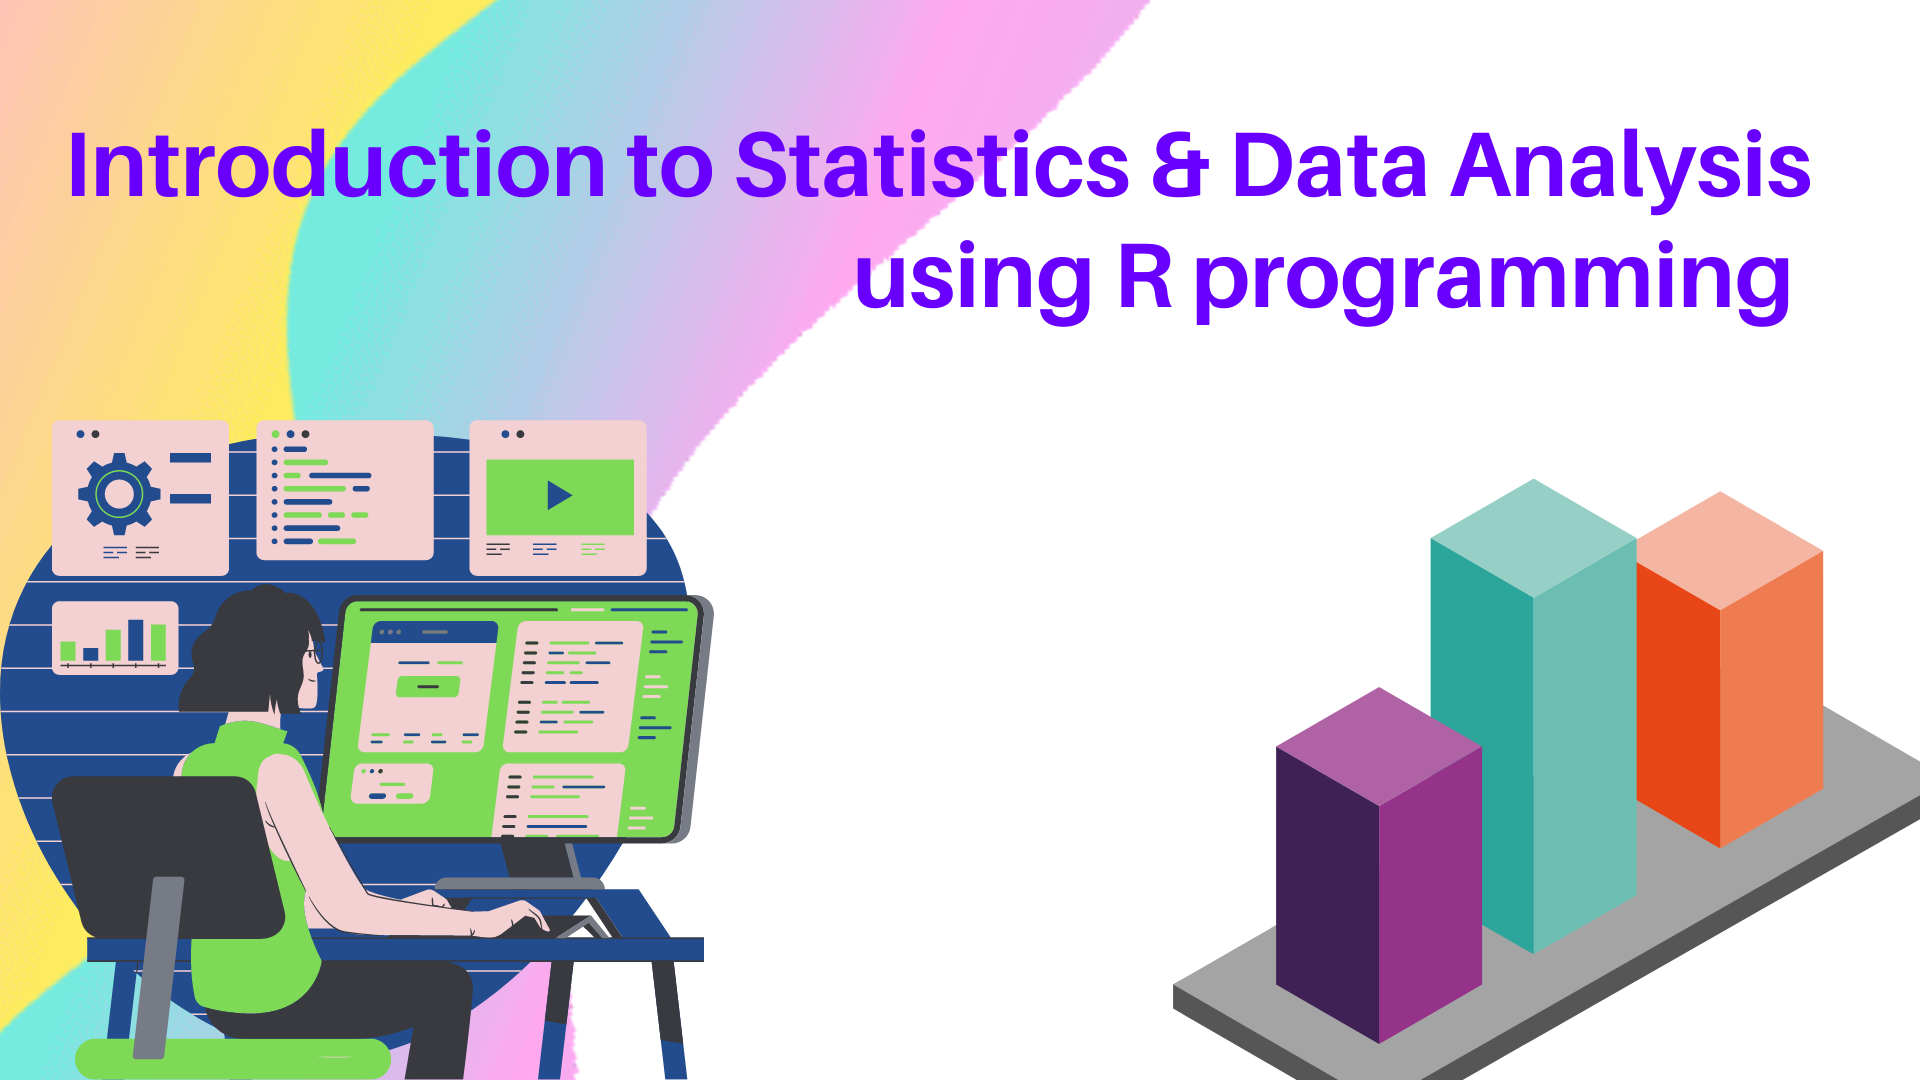 Introduction to Statistics & Data Analysis using R programming